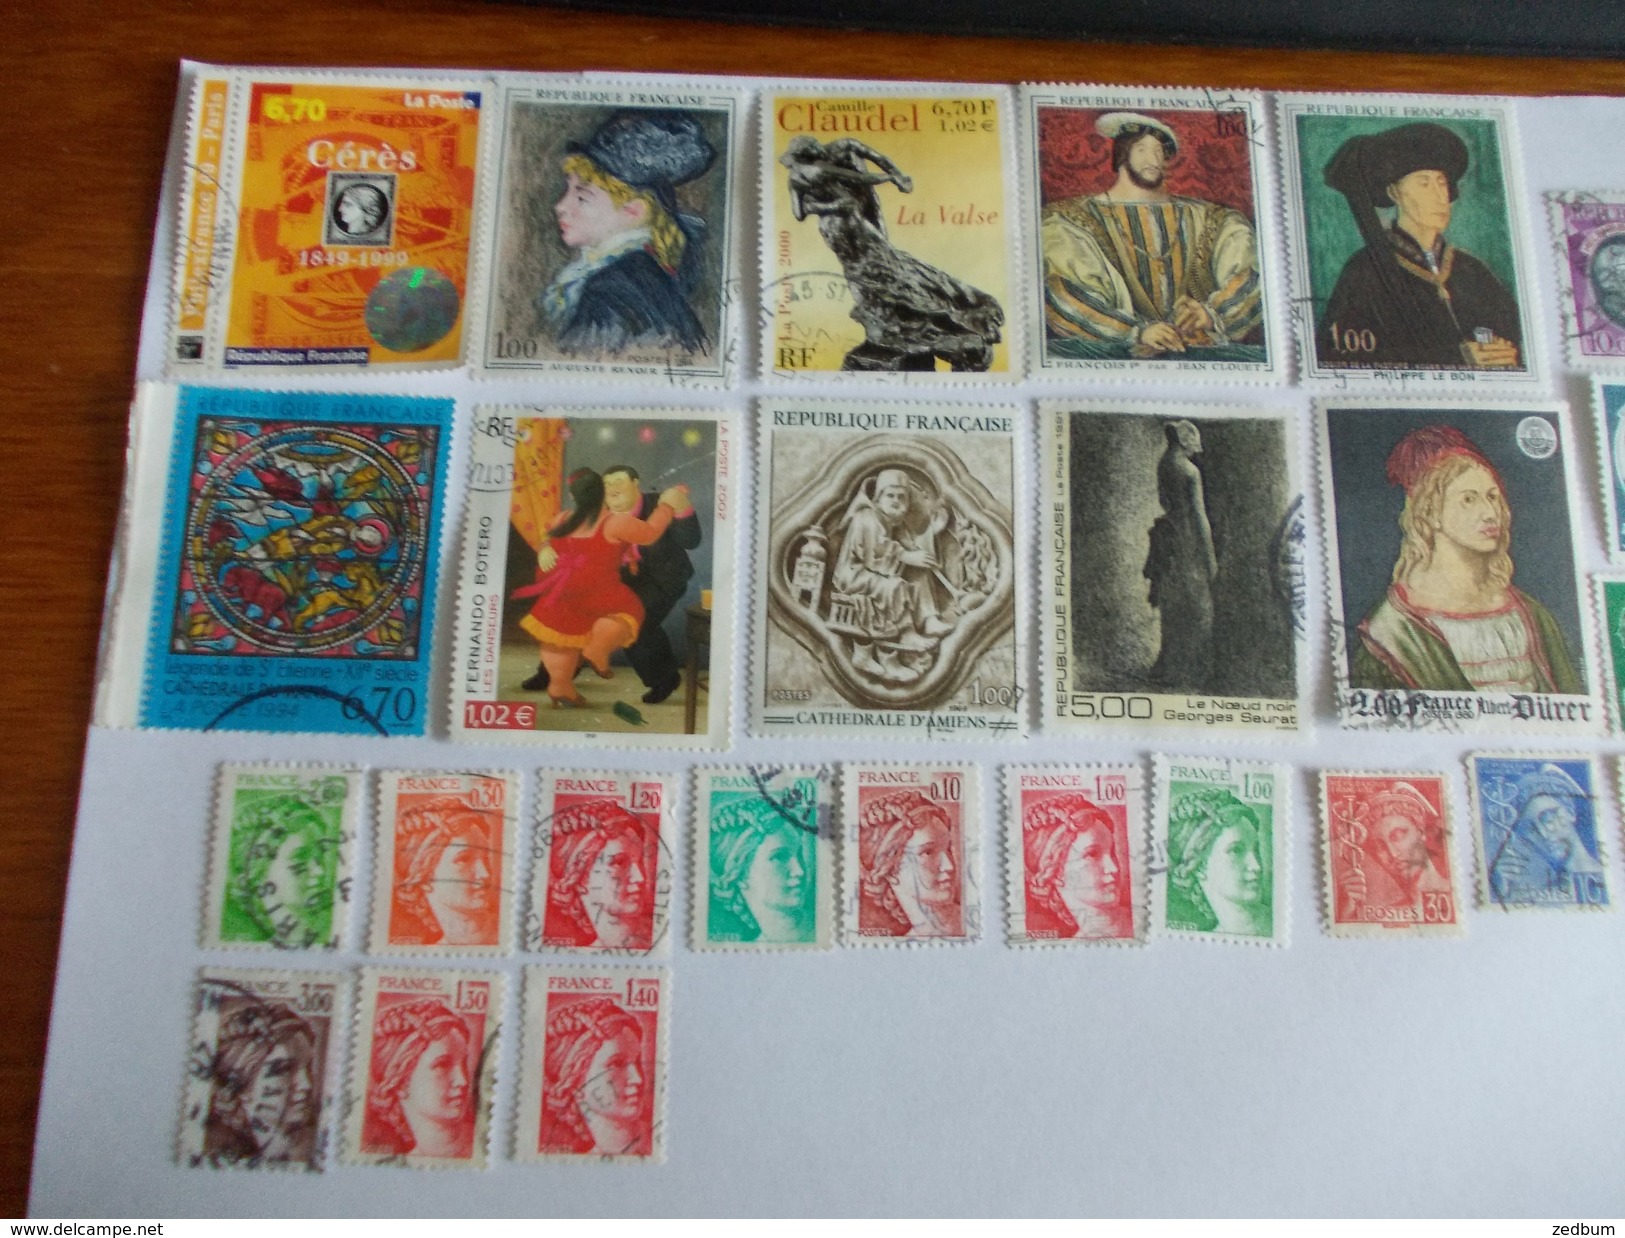 TIMBRE France Lot De 30 Timbres à Identifier - Lots & Kiloware (mixtures) - Max. 999 Stamps